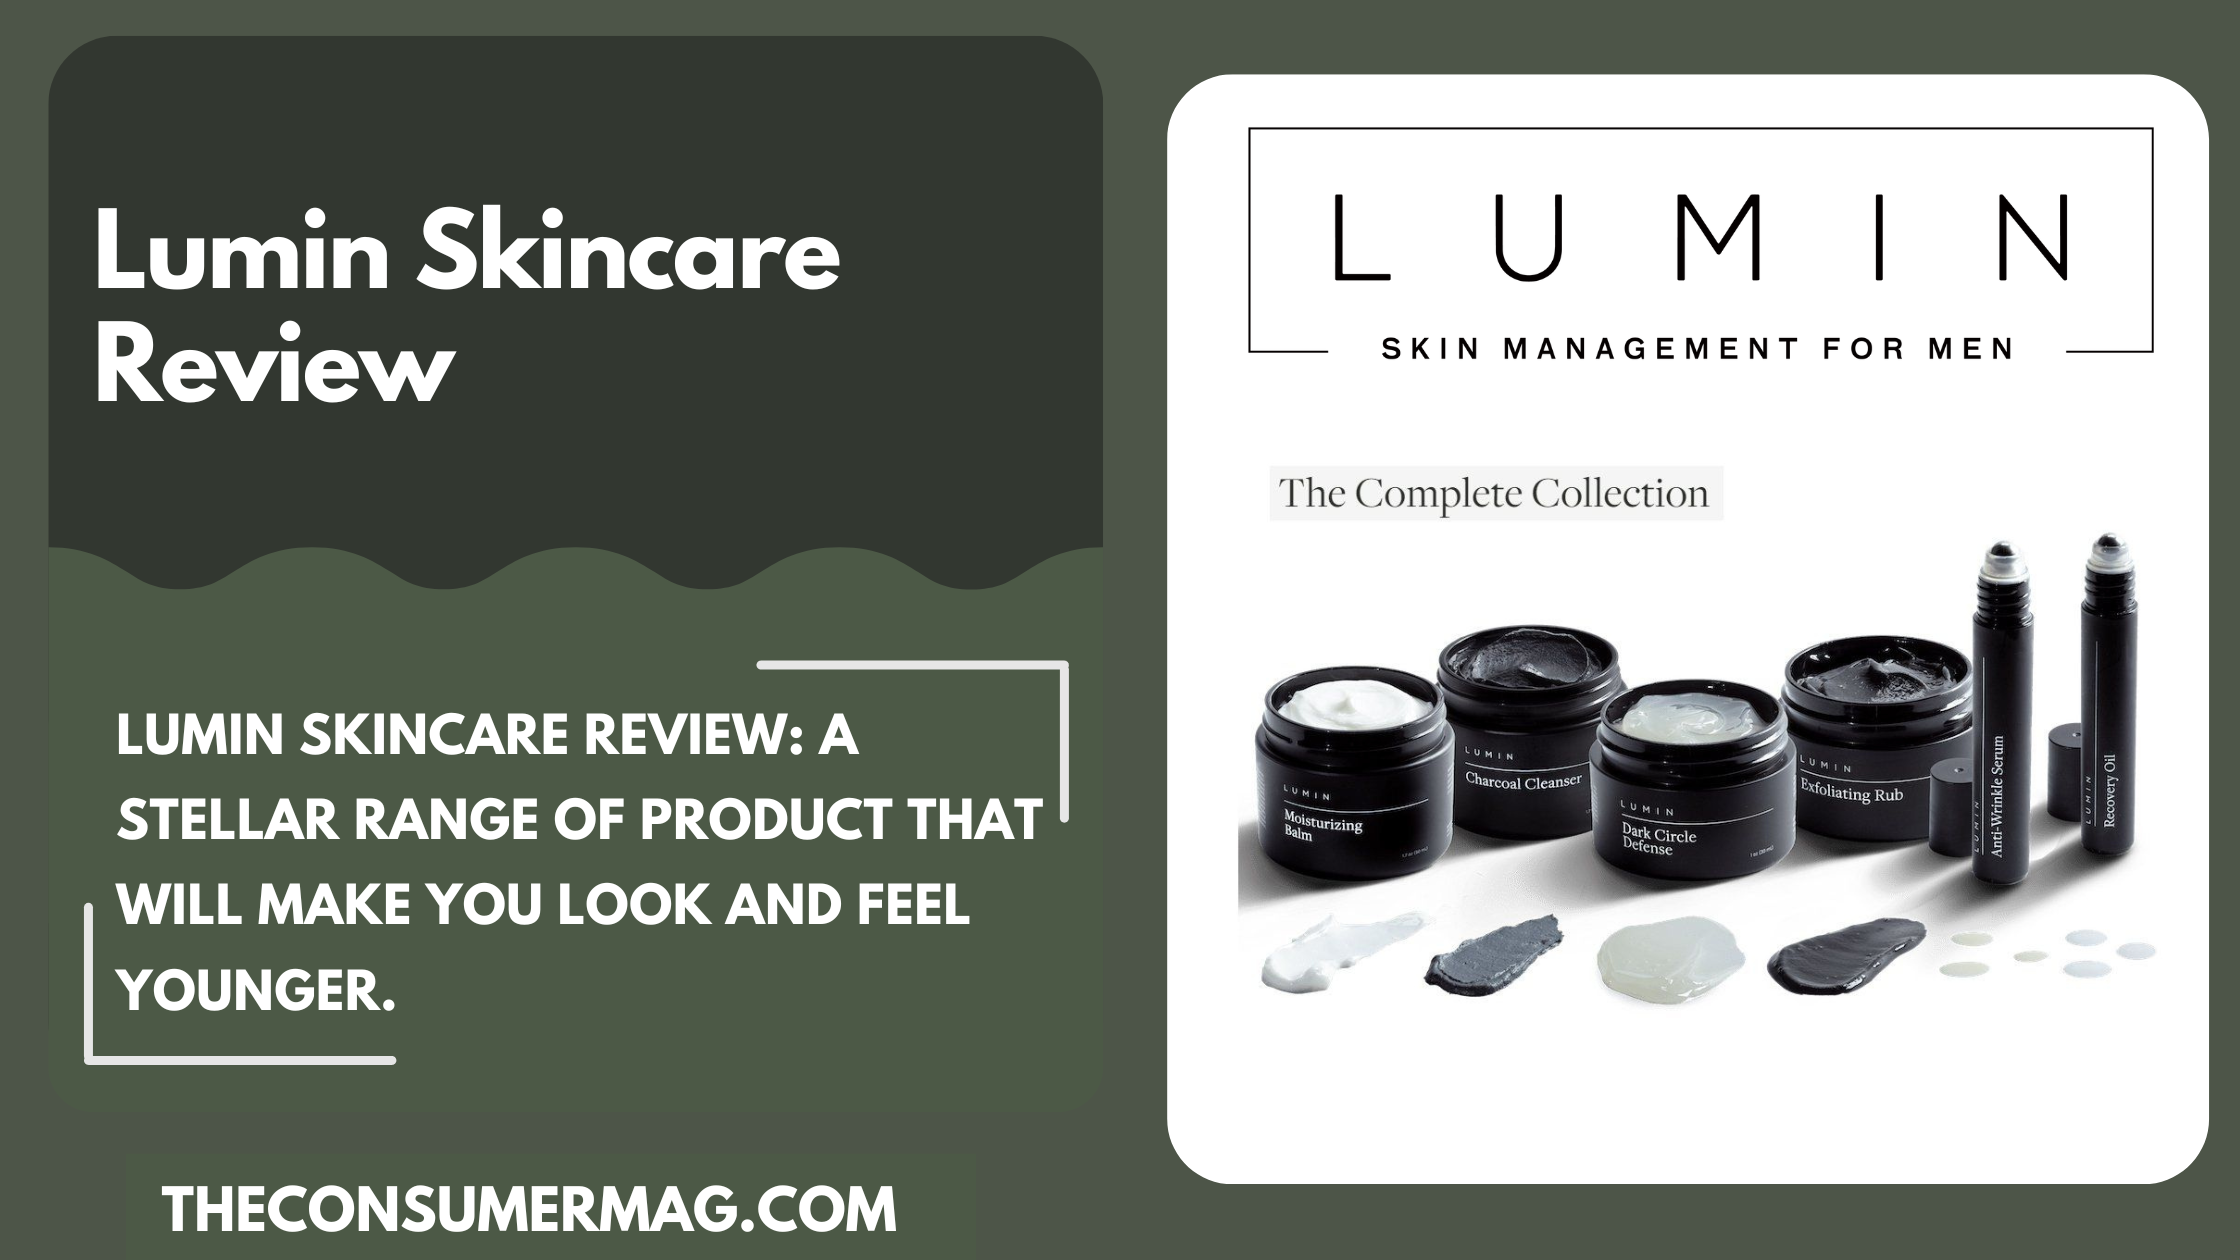 Lumin skin care featured image